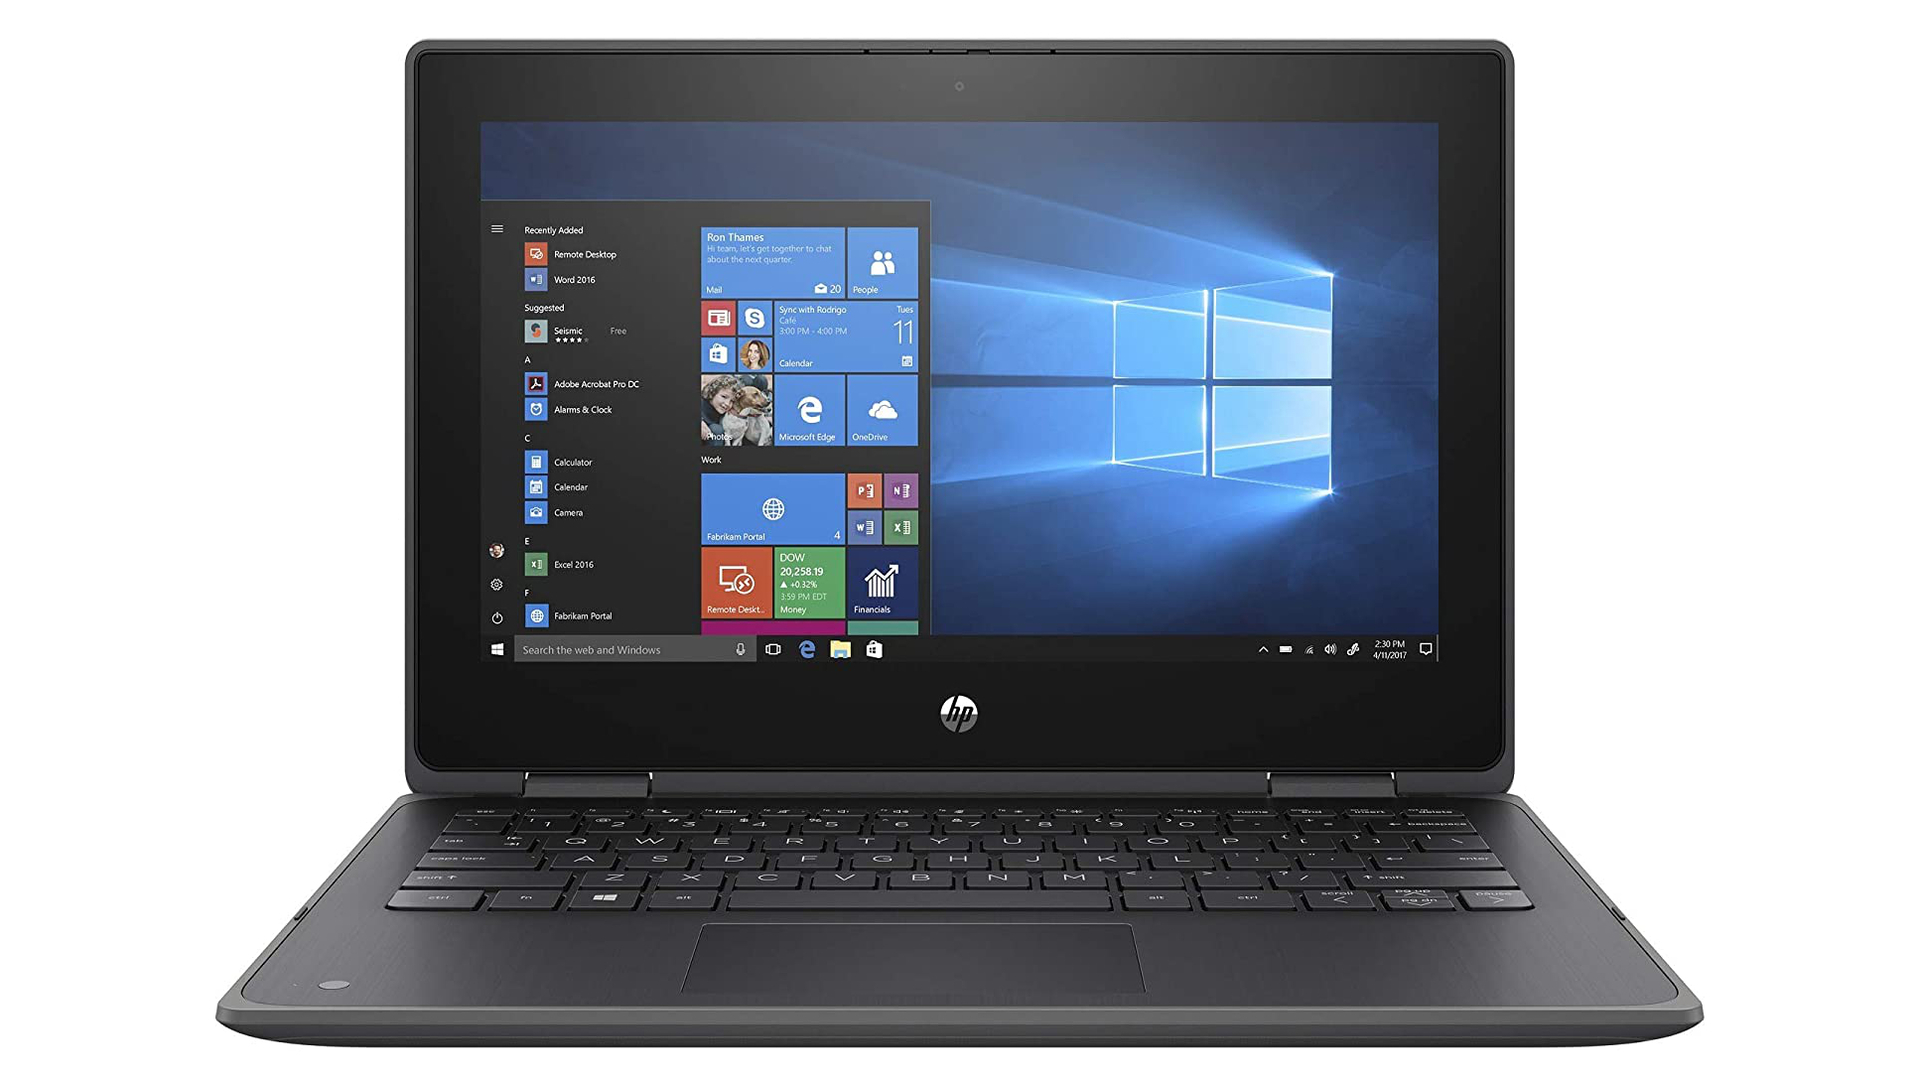 HP ProBook x360 11 G6 - The best mini laptops